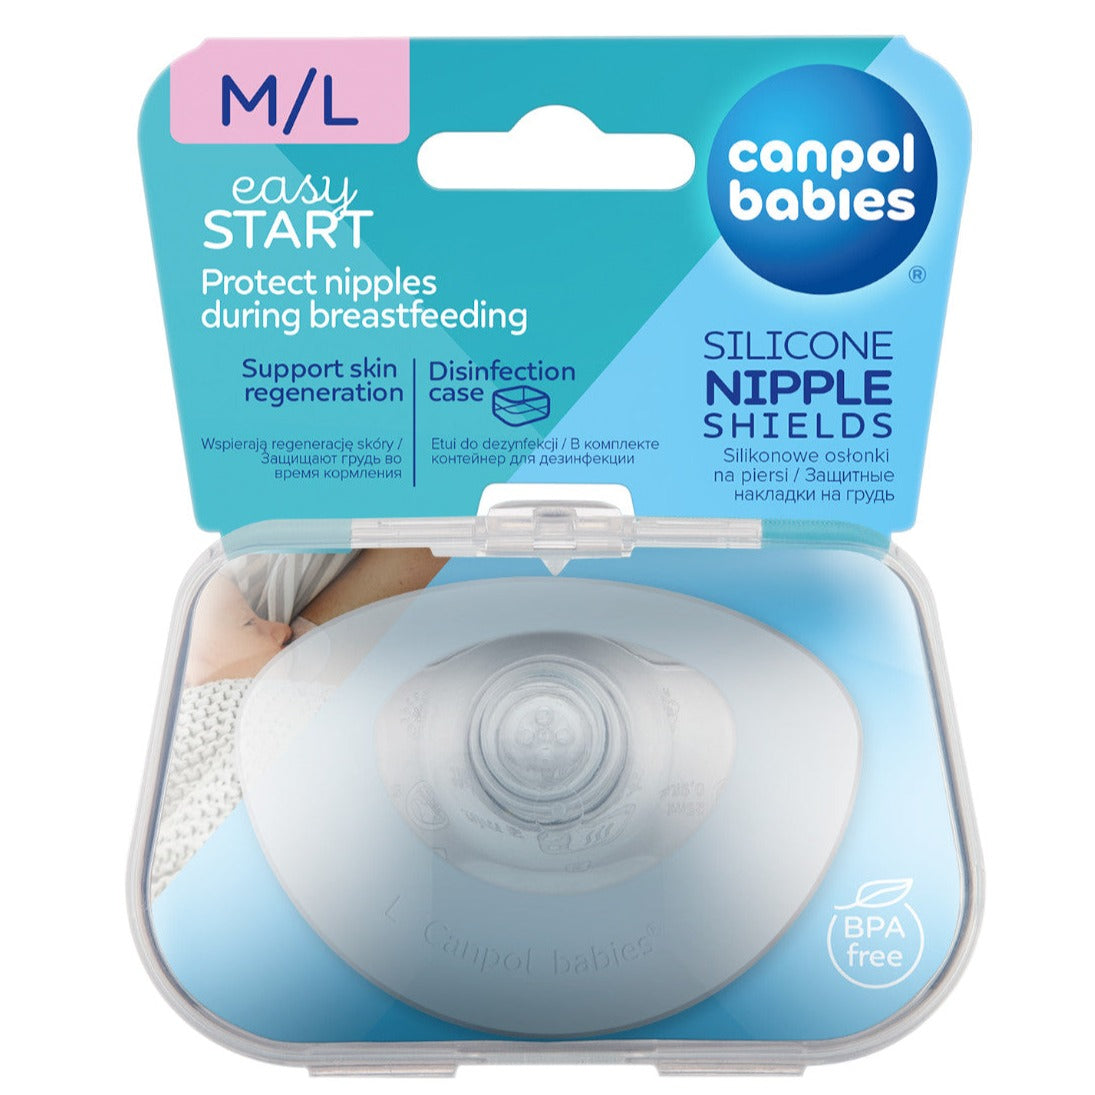 Canpol Babies: silikonowe osłonki piersi EasyStart M/L 2 szt.